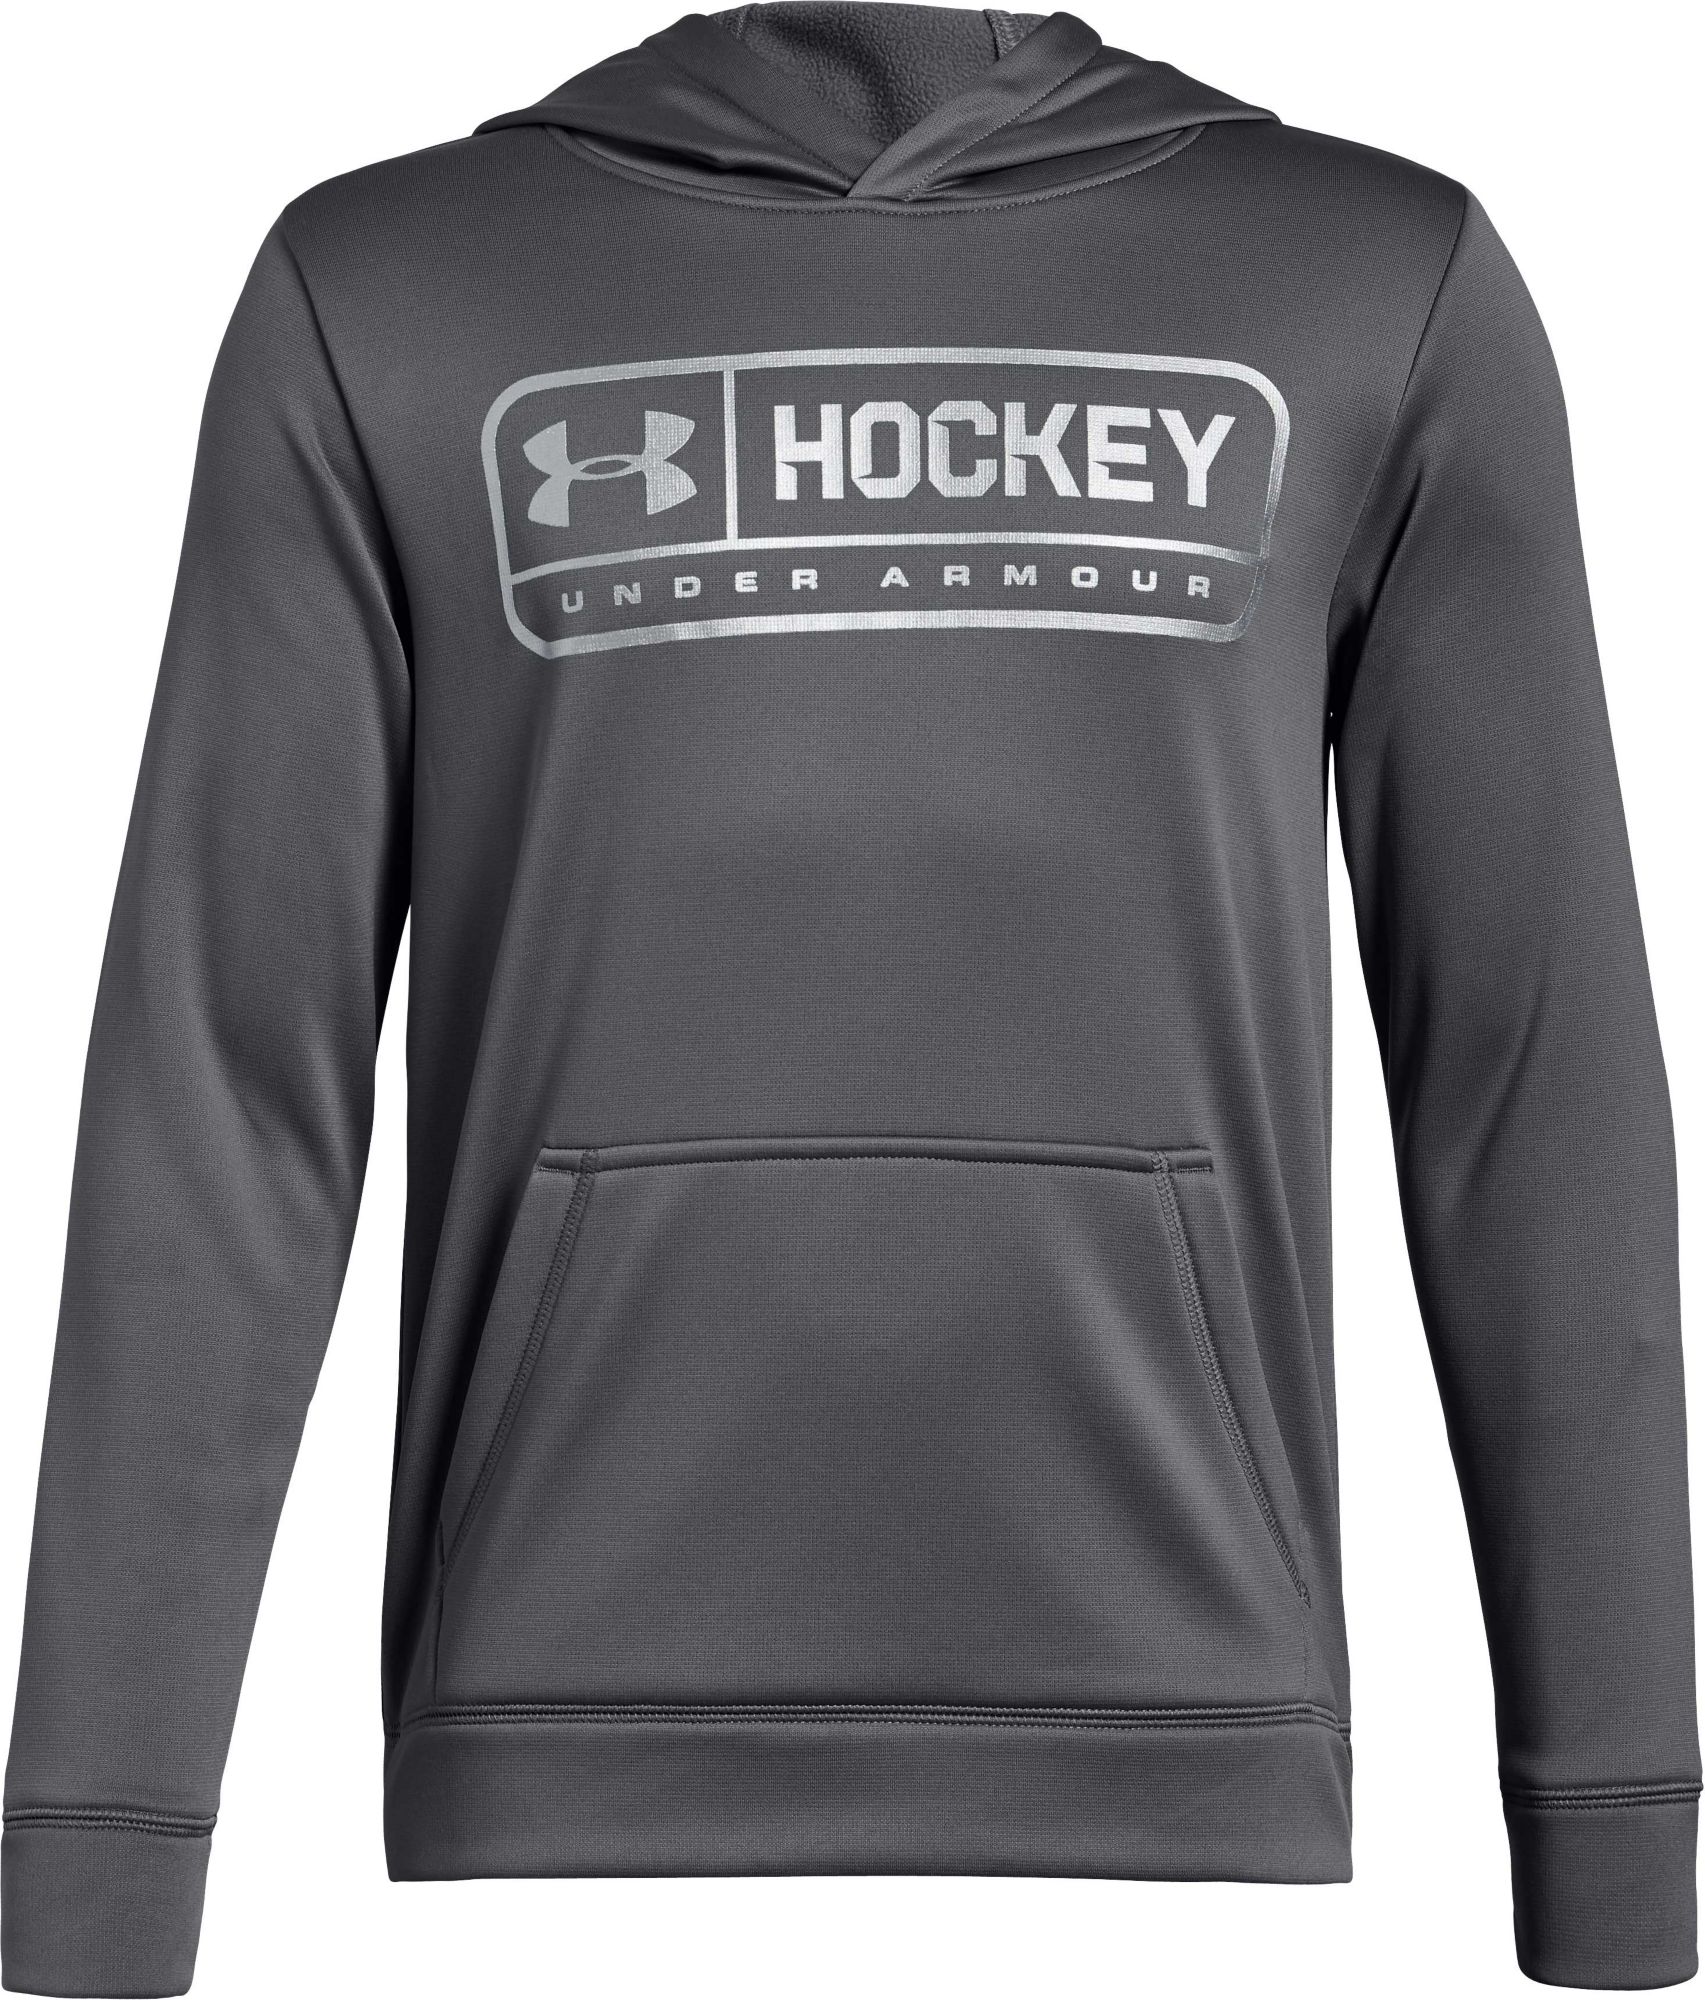 hockey under armour sweatshirt